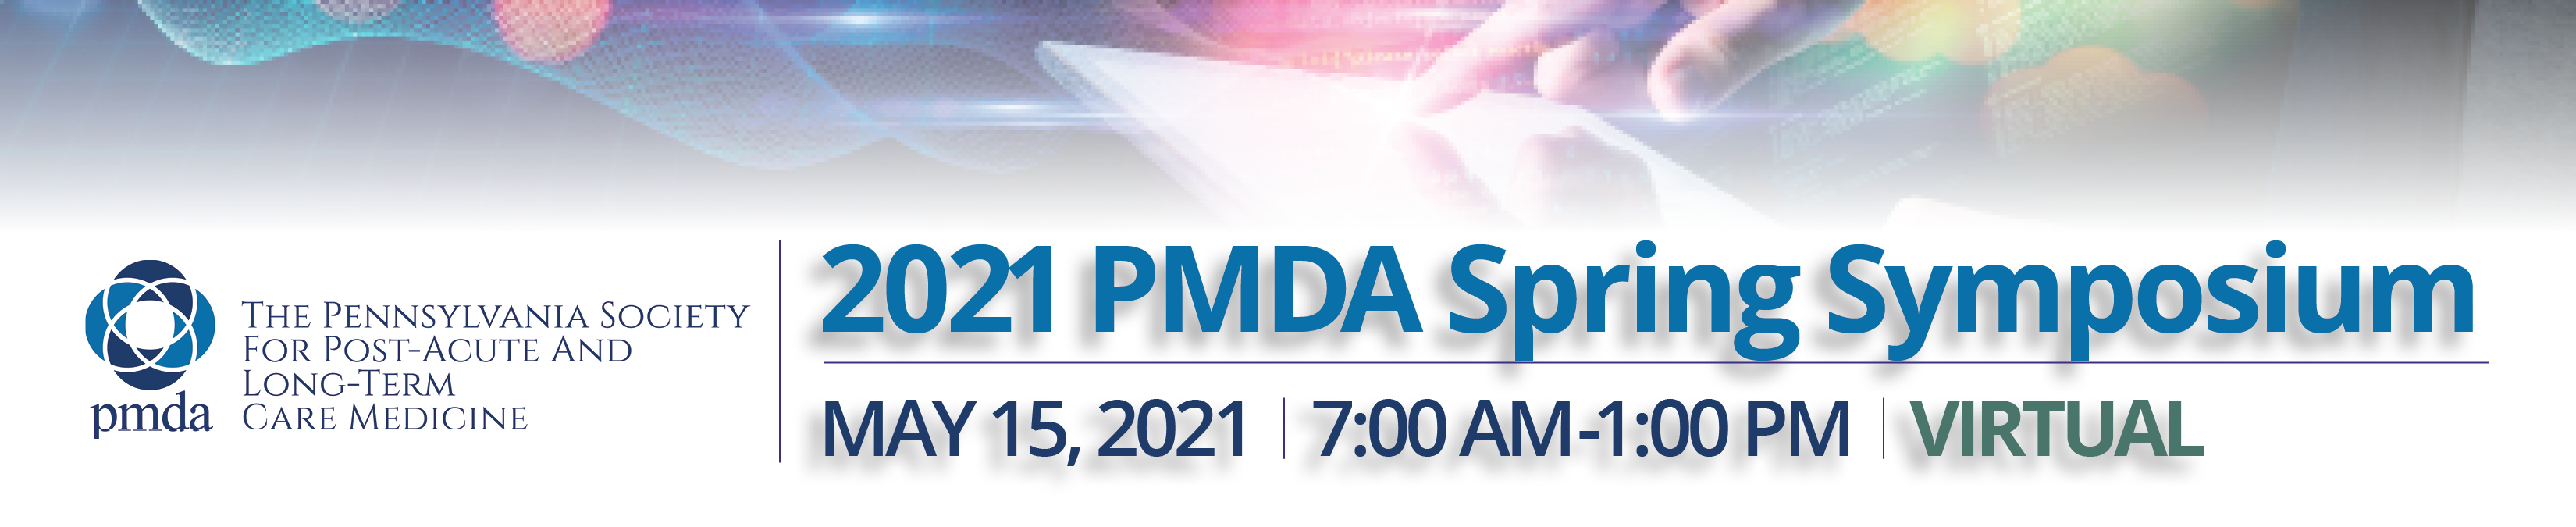 2021 PMDA Spring Symposium